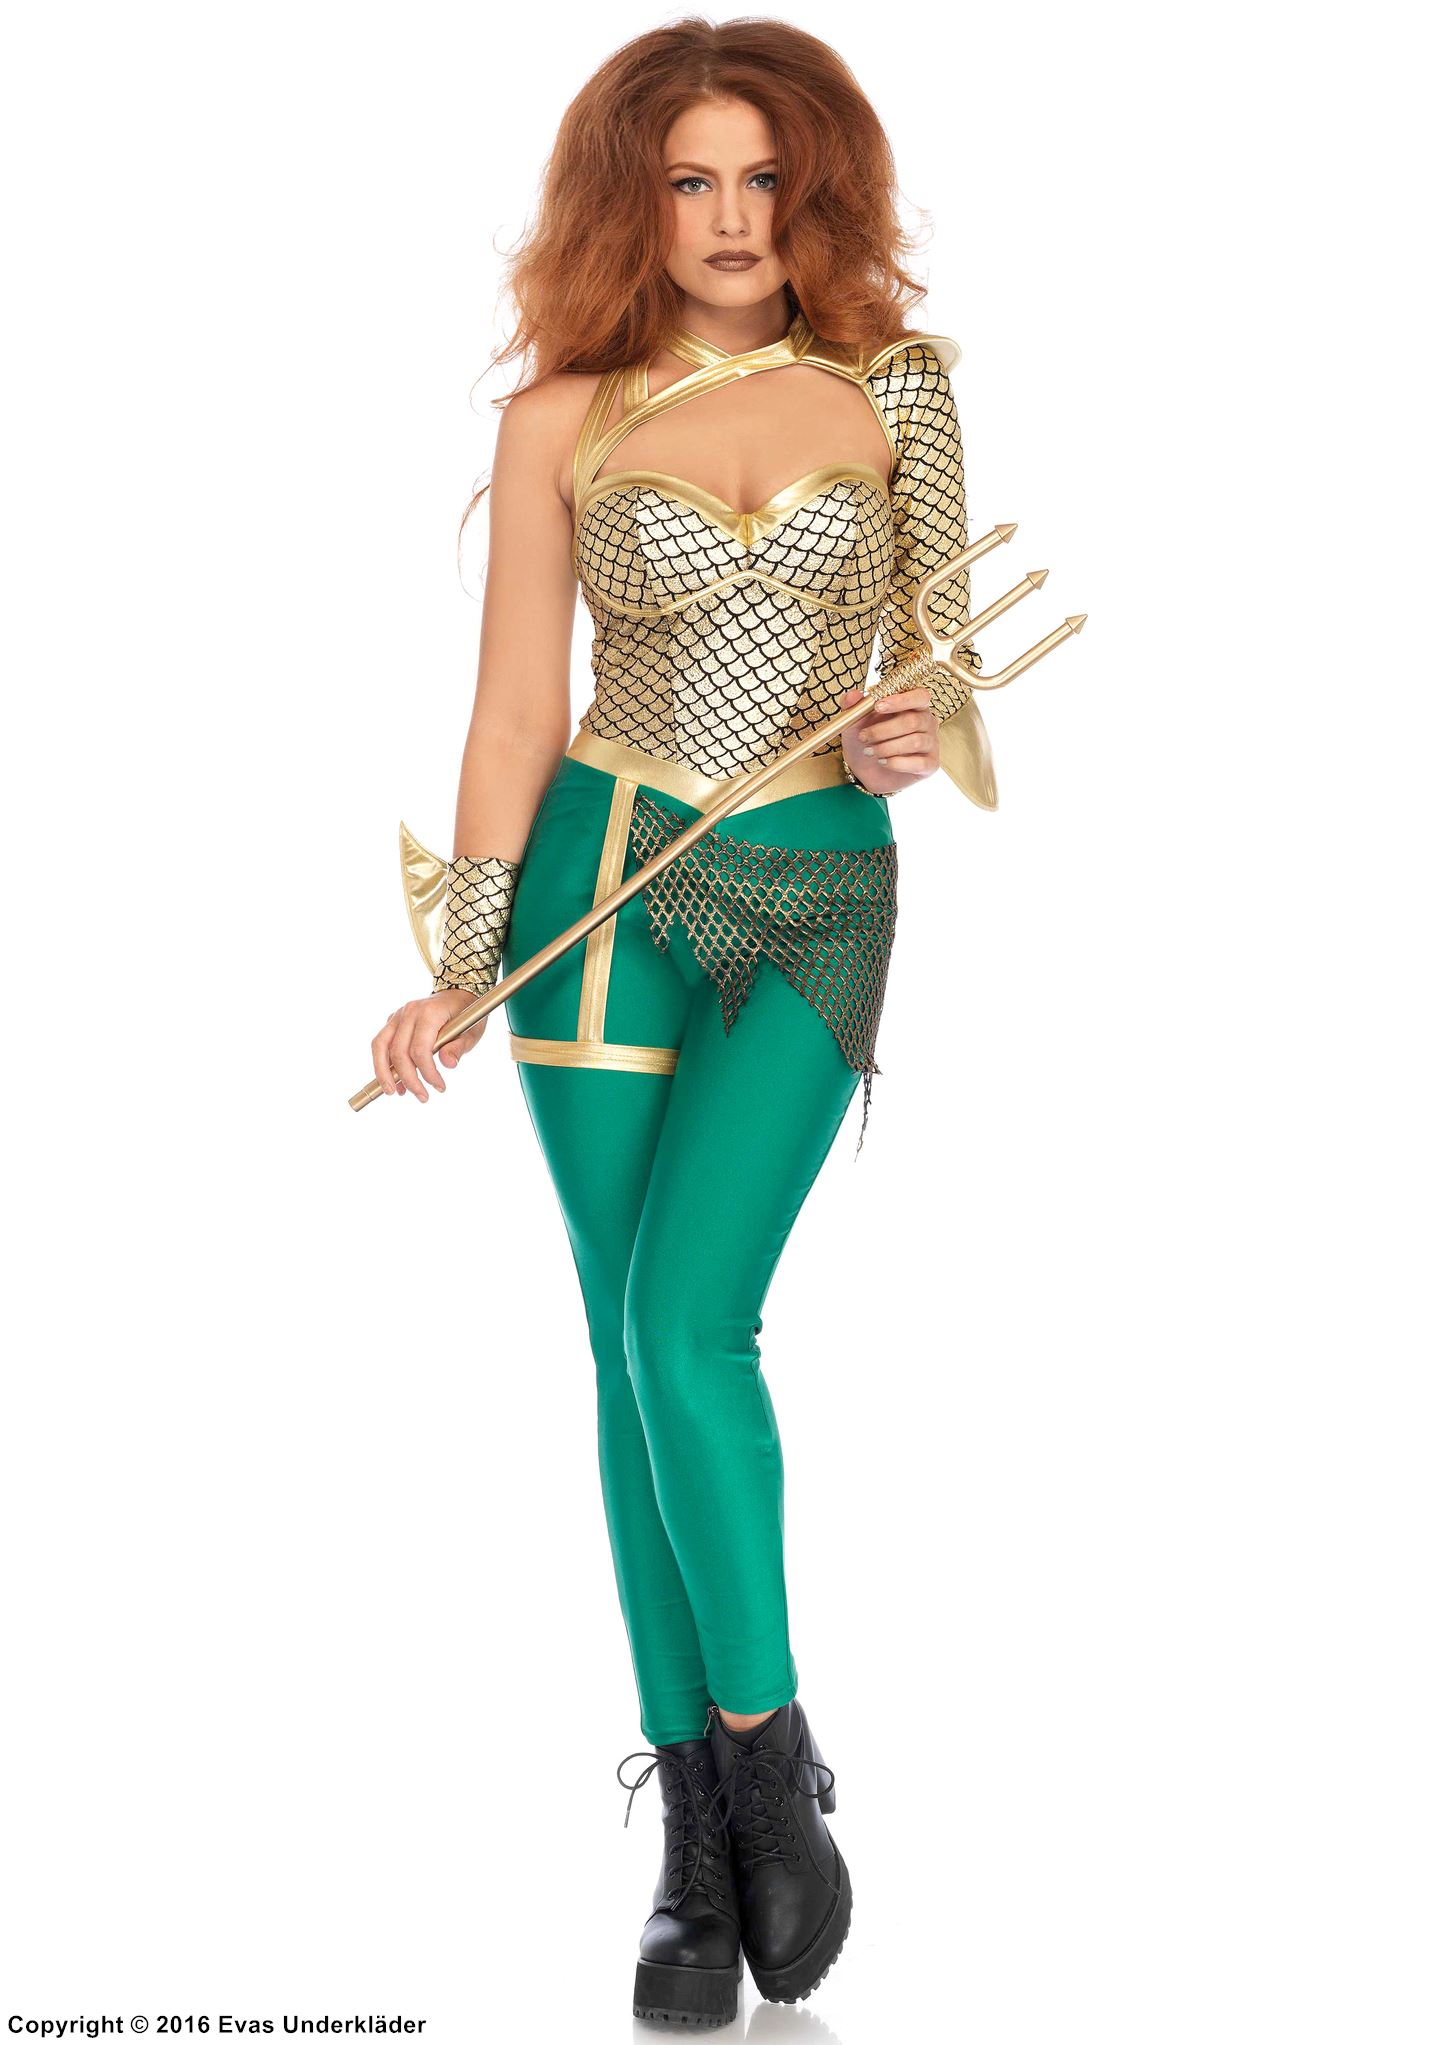 Mermaid warrior, costume catsuit, fin, fish scales